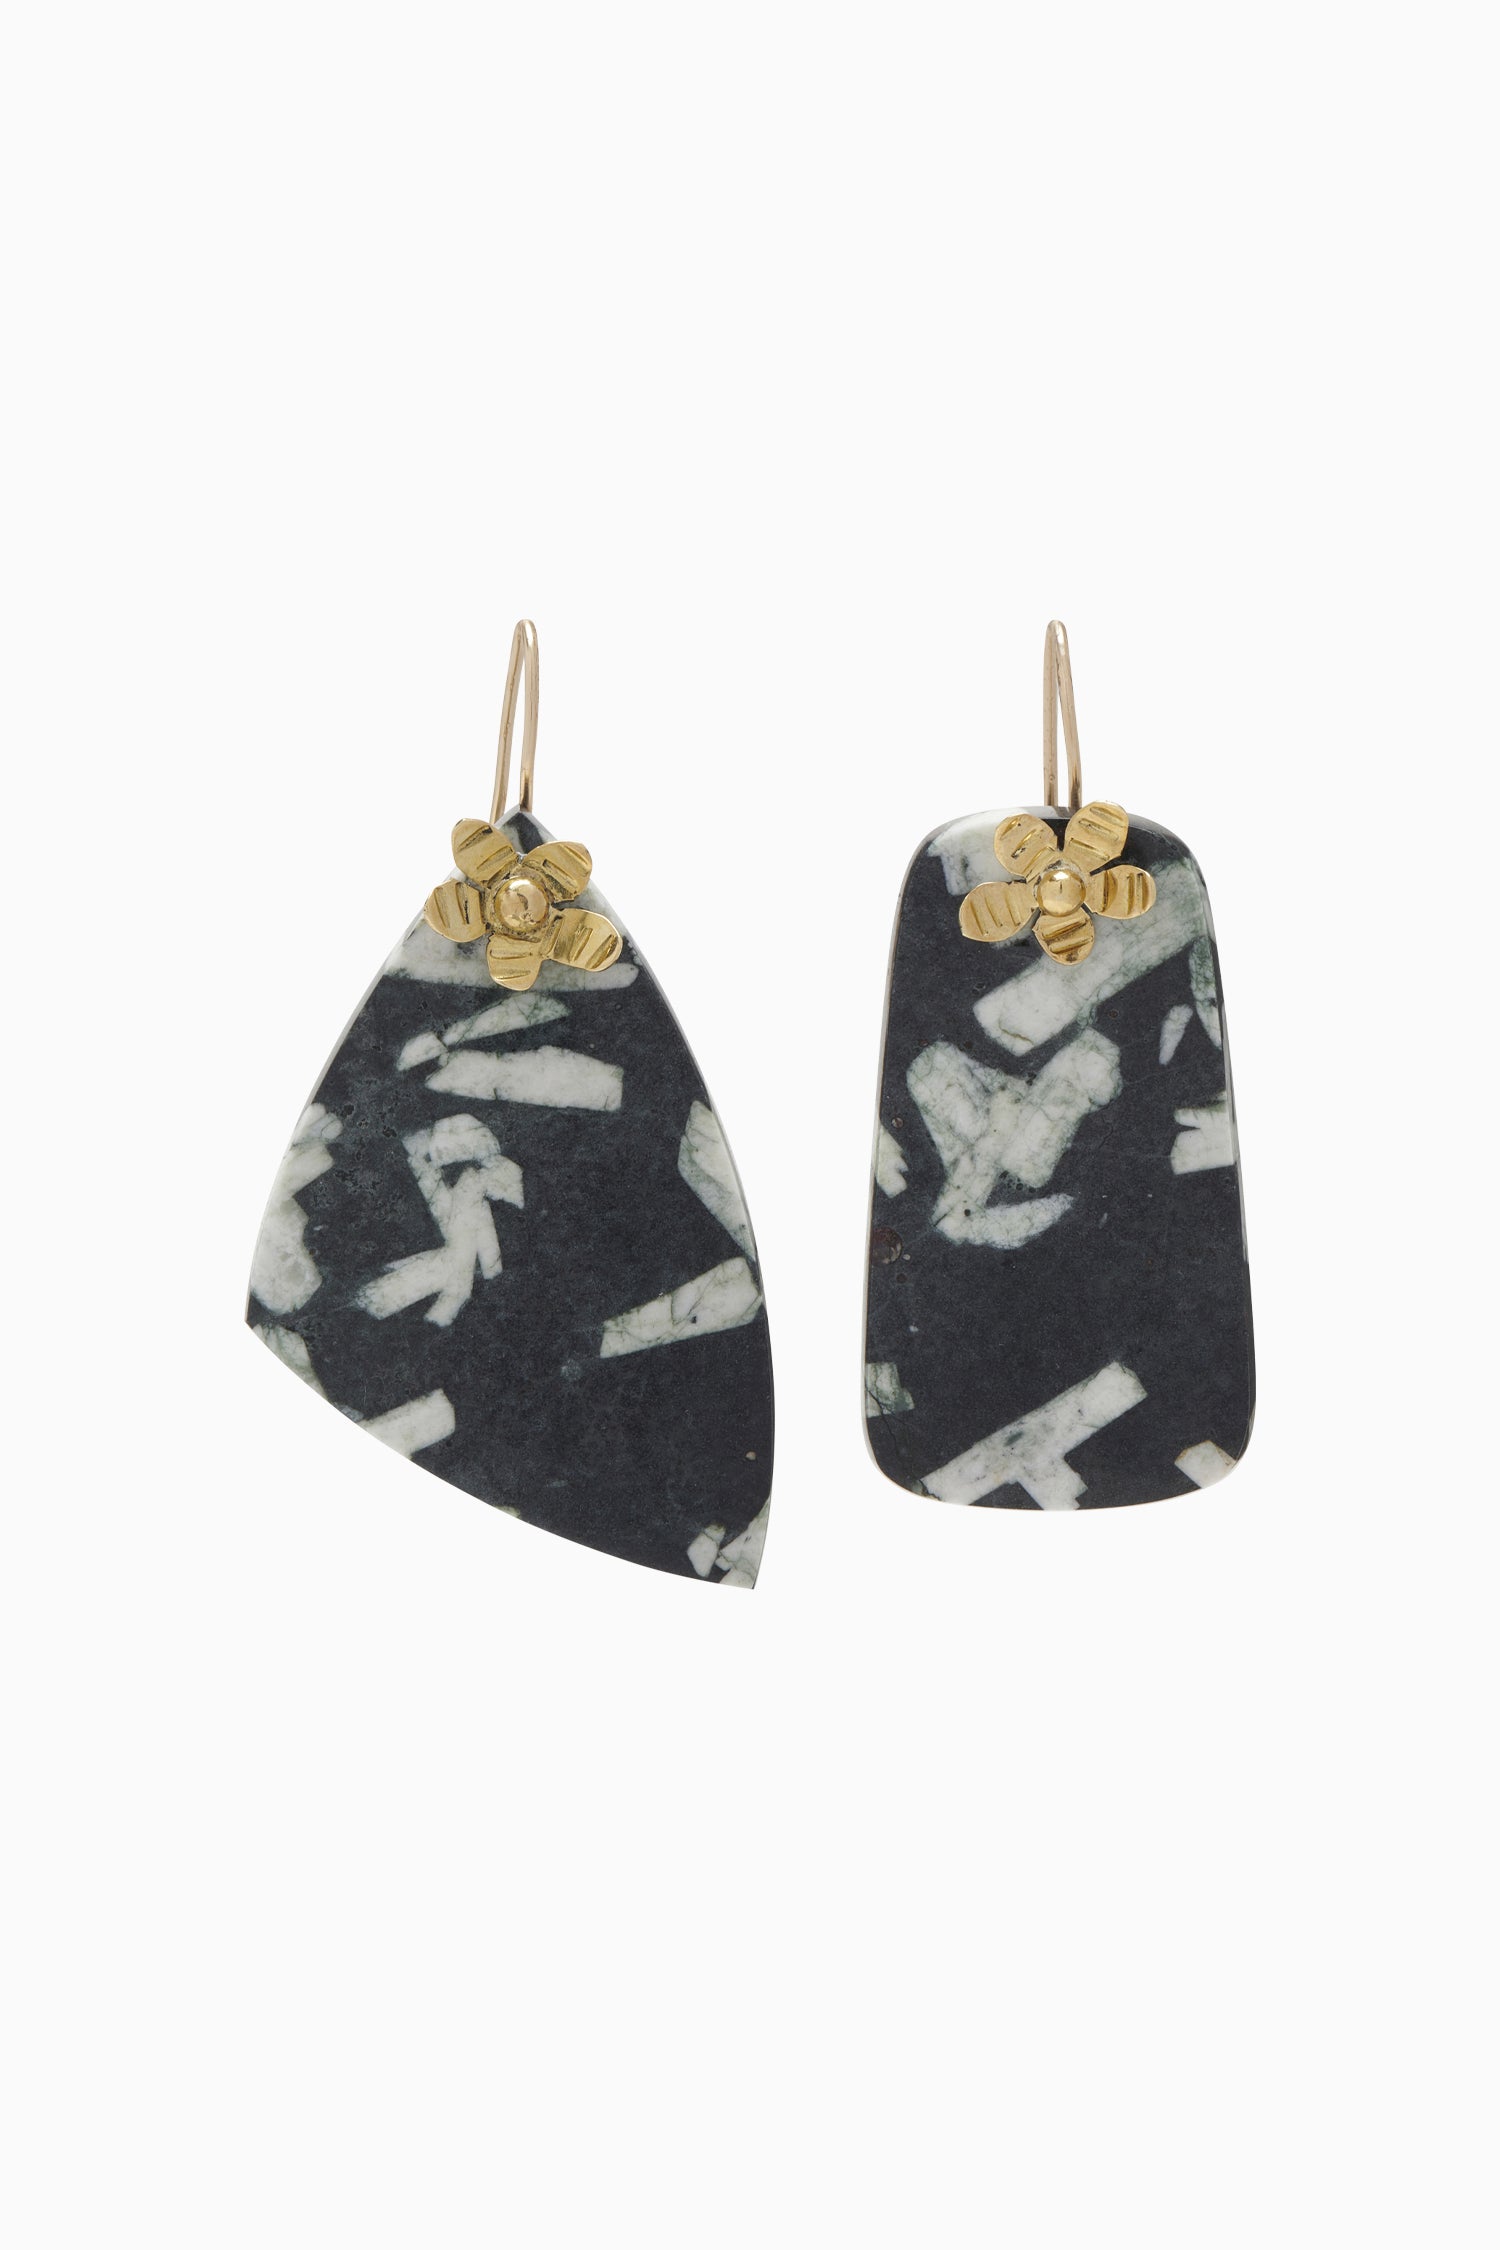 Ulla Johnson Hammered Chain Organic Stone Earring - Chinese Writing Stone